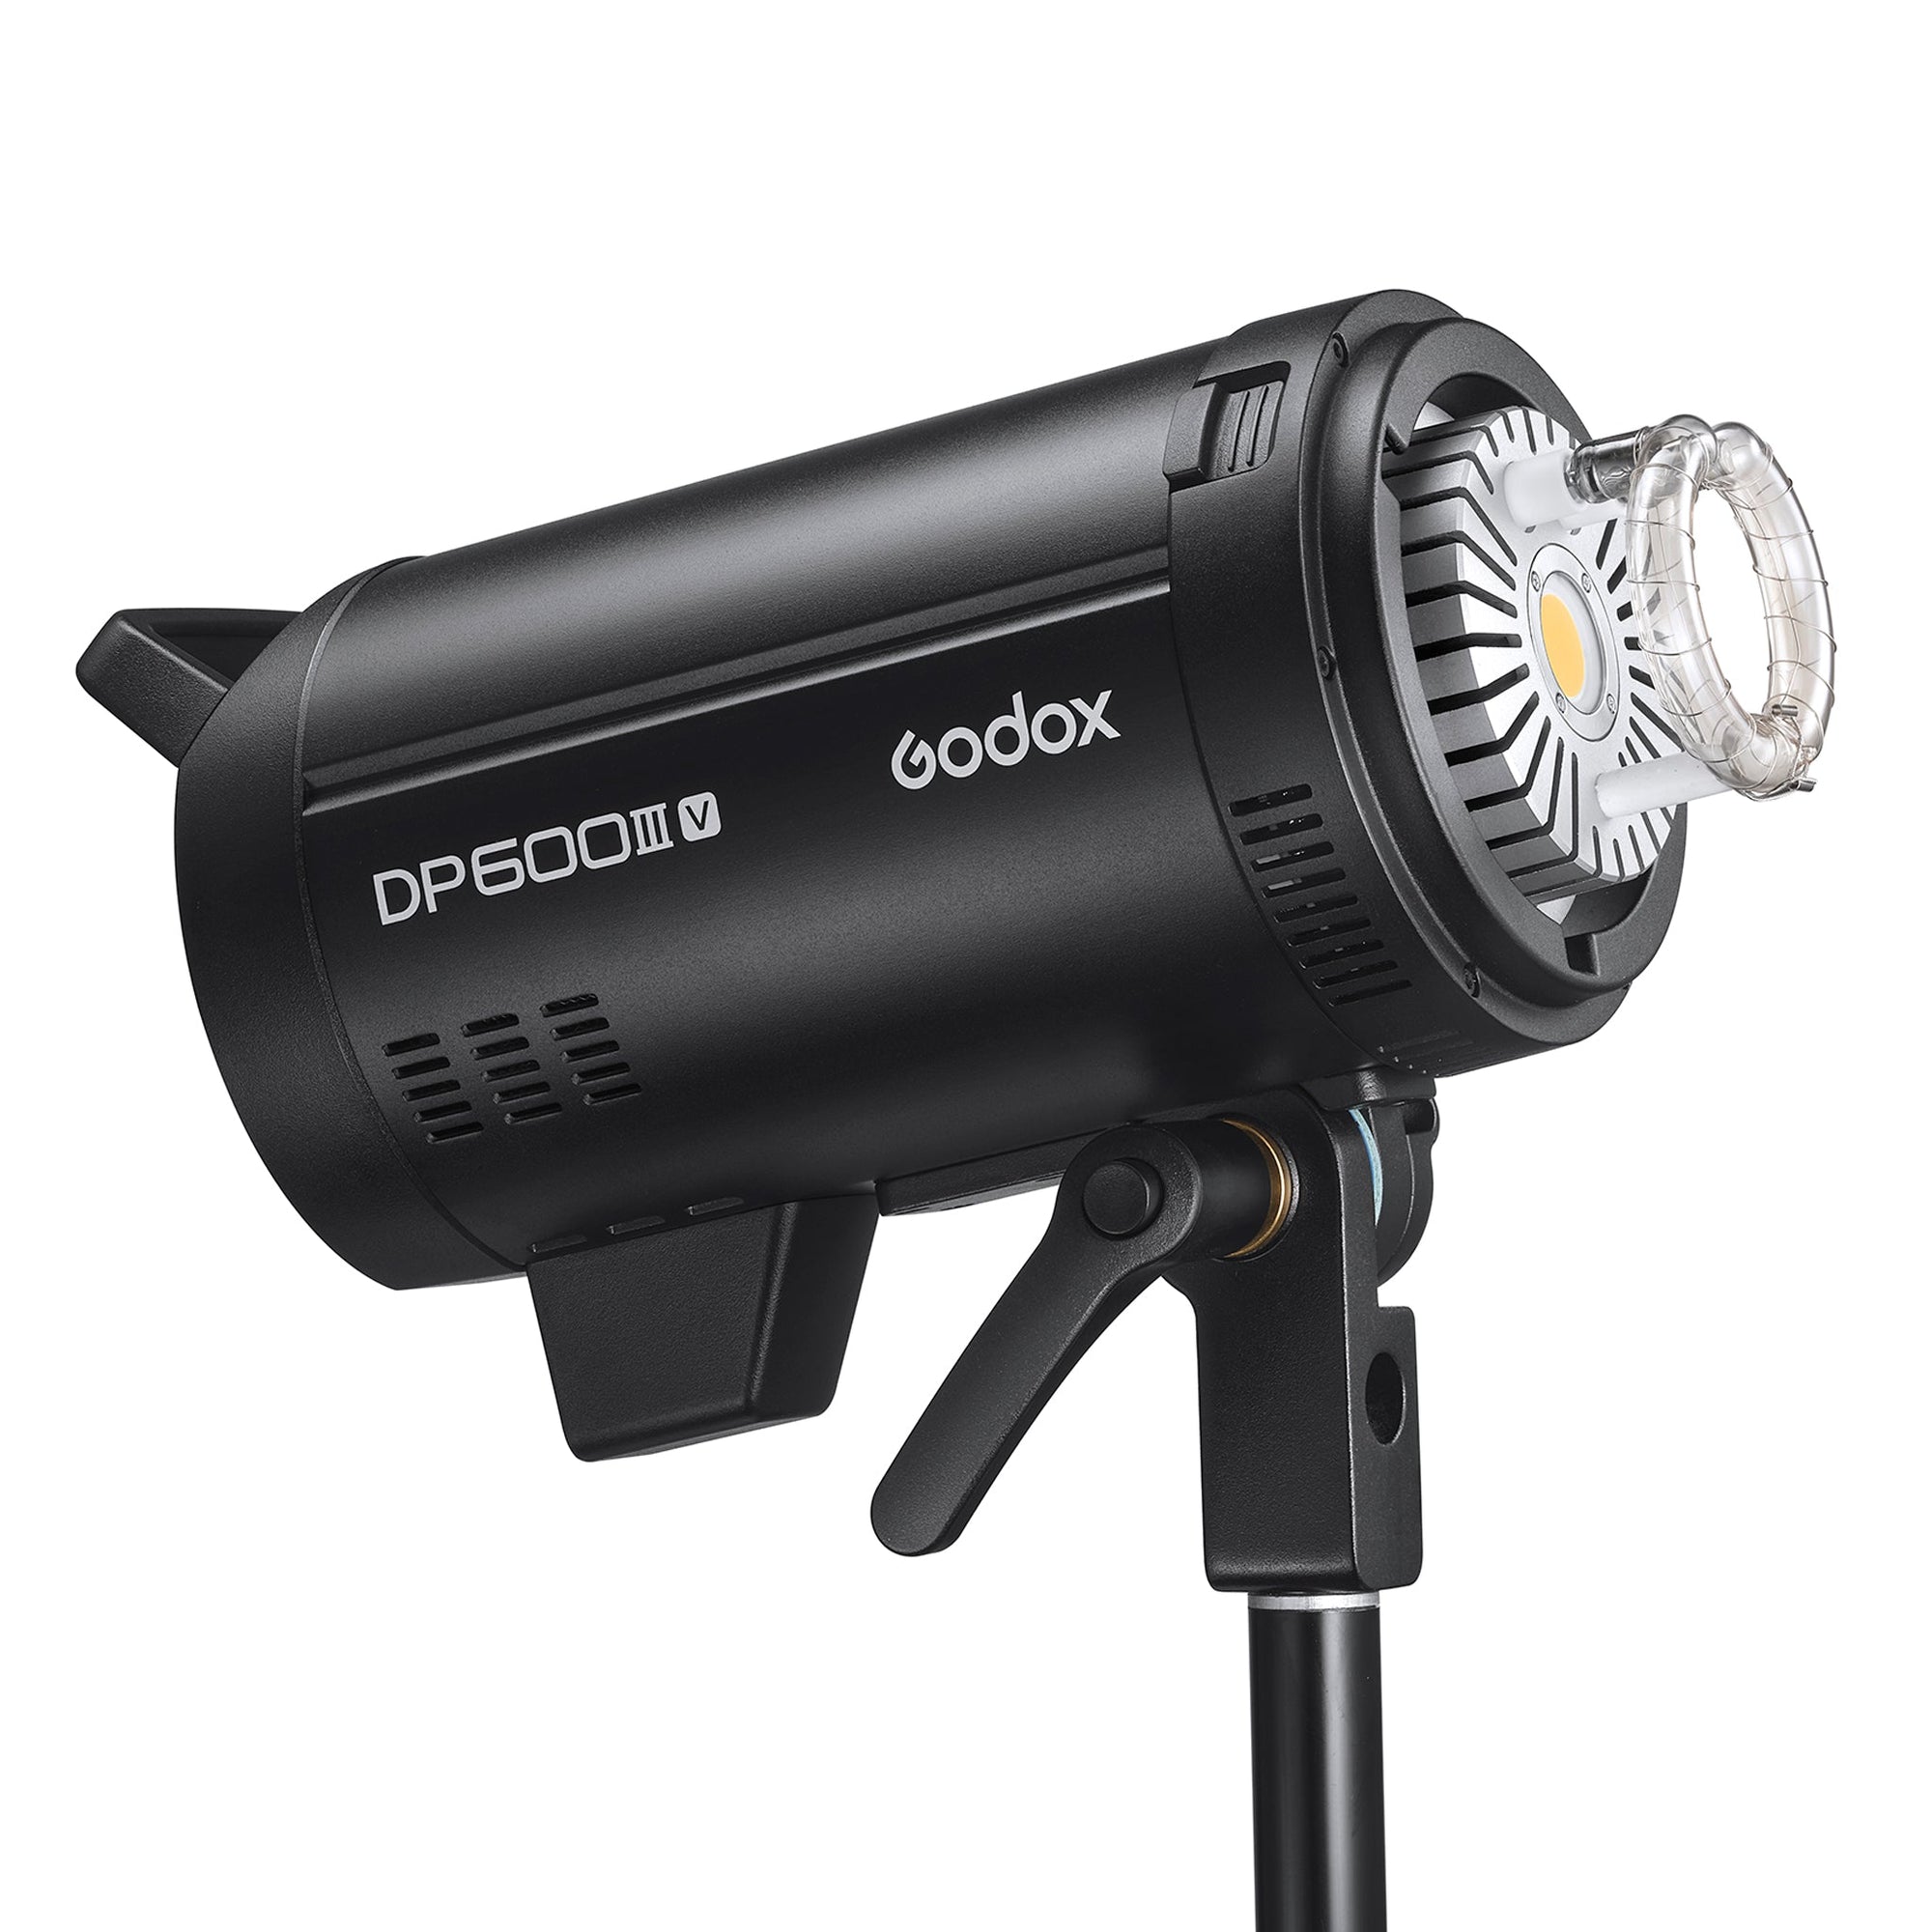 Strobepro Godox DP600iiiV Studio Lighting Kit